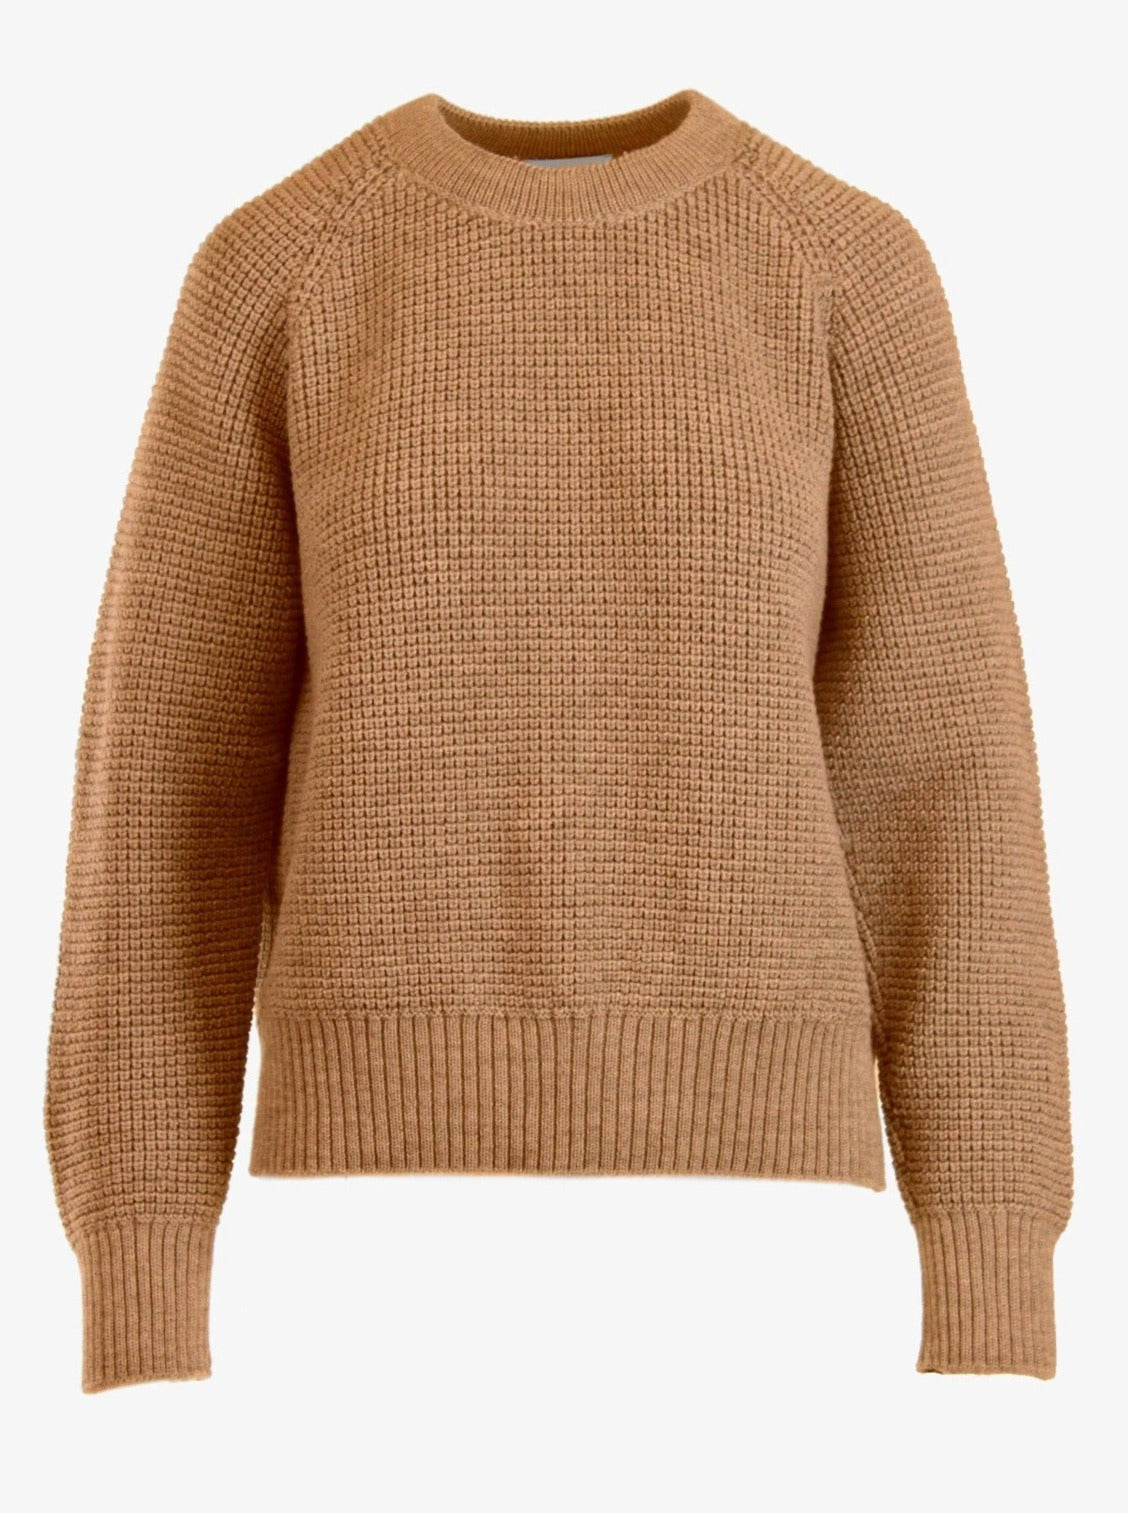 finley camel merino 3D knit pullover sweater